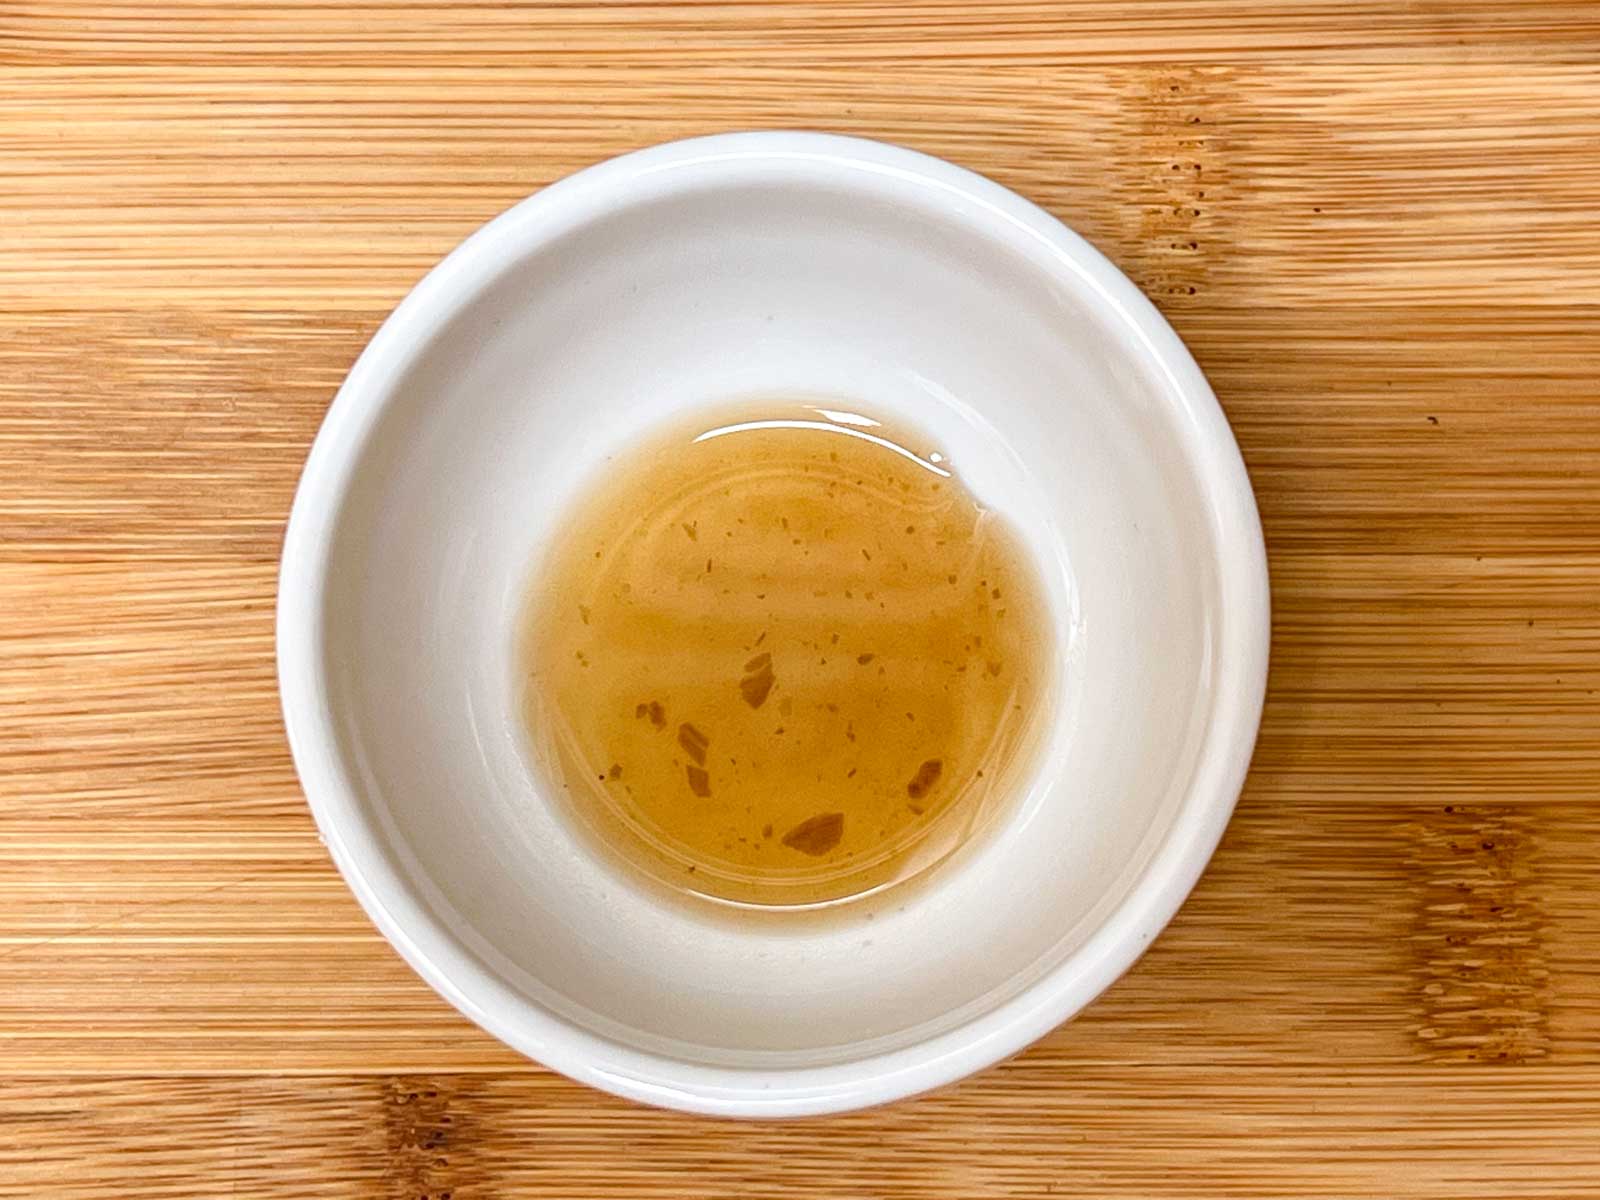 Sesame oil in a white bowl